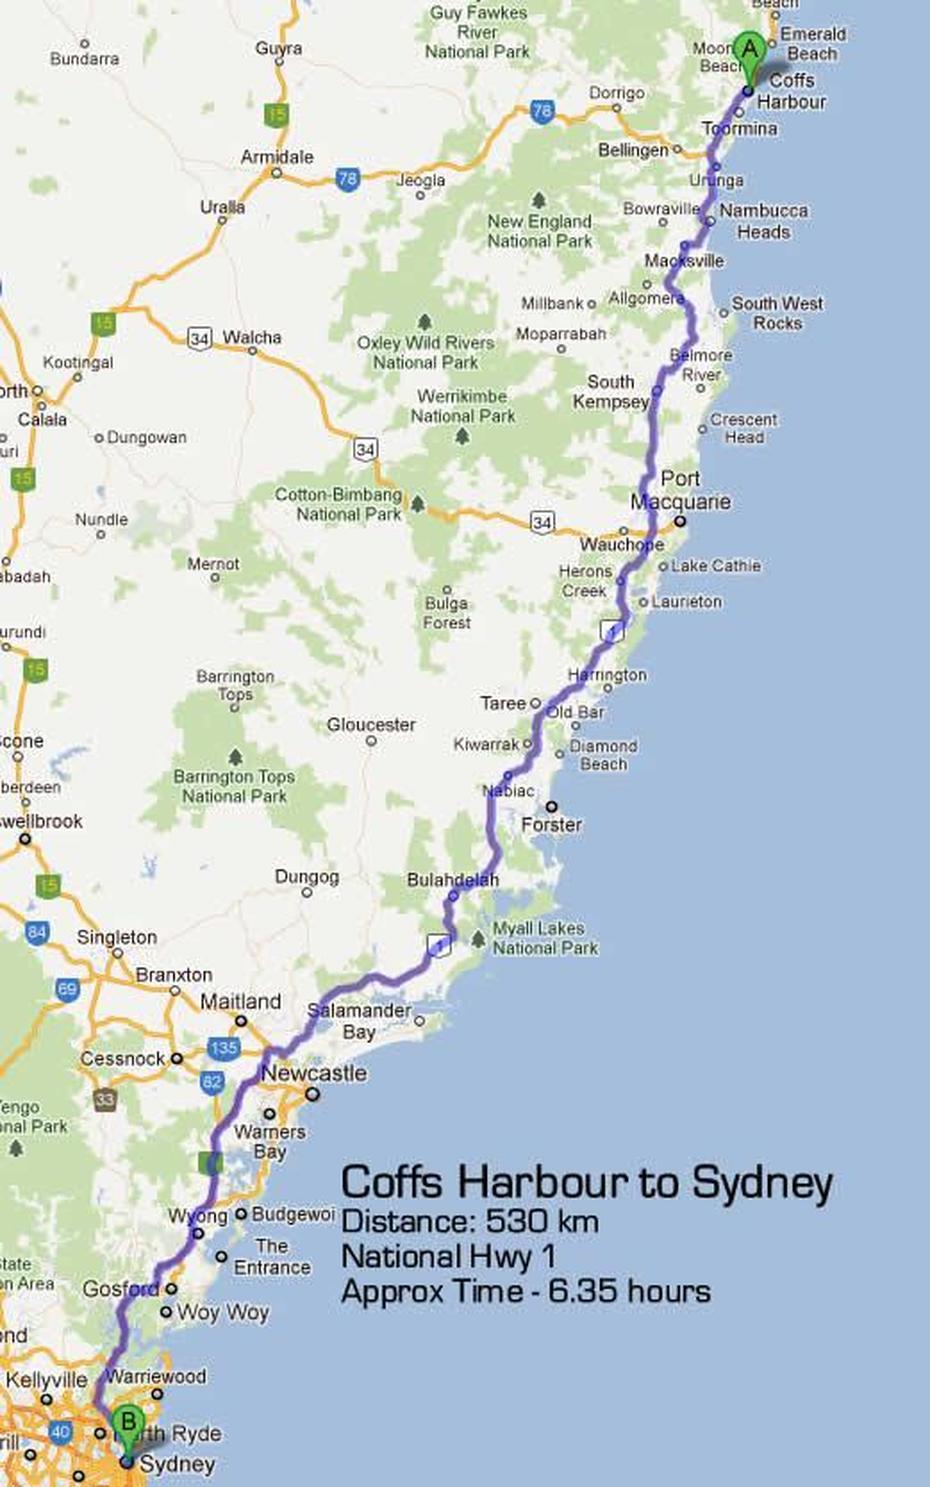 Coffs Harbour Map And Coffs Harbour Satellite Image, Coffs Harbour, Australia, Opal Cove Coffs Harbour, Australia Land